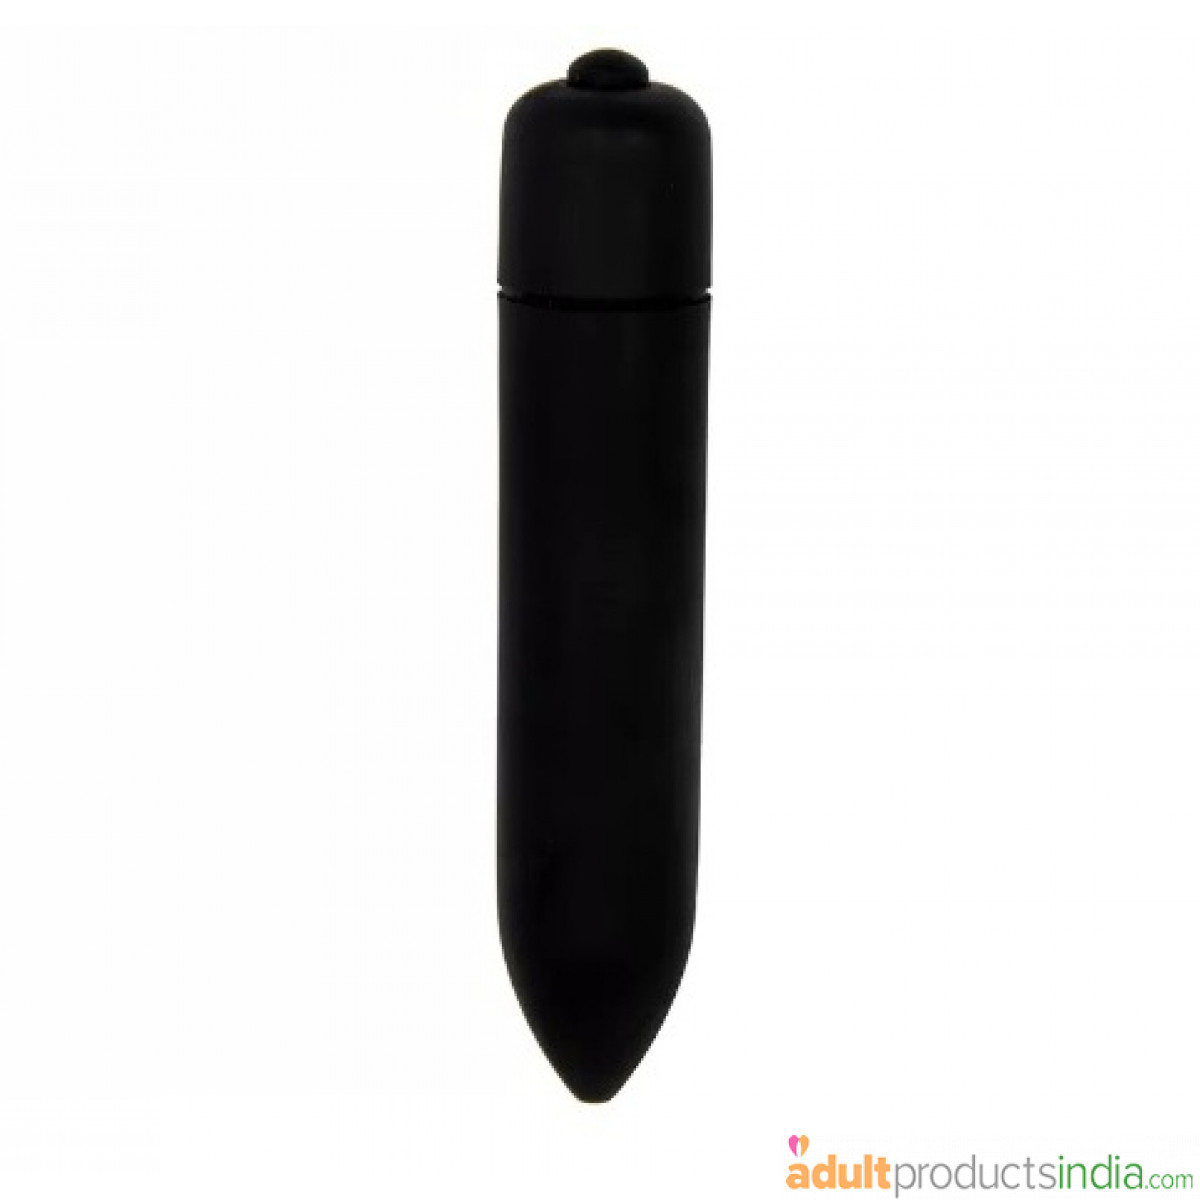 Strong Black Bullet Vibrator